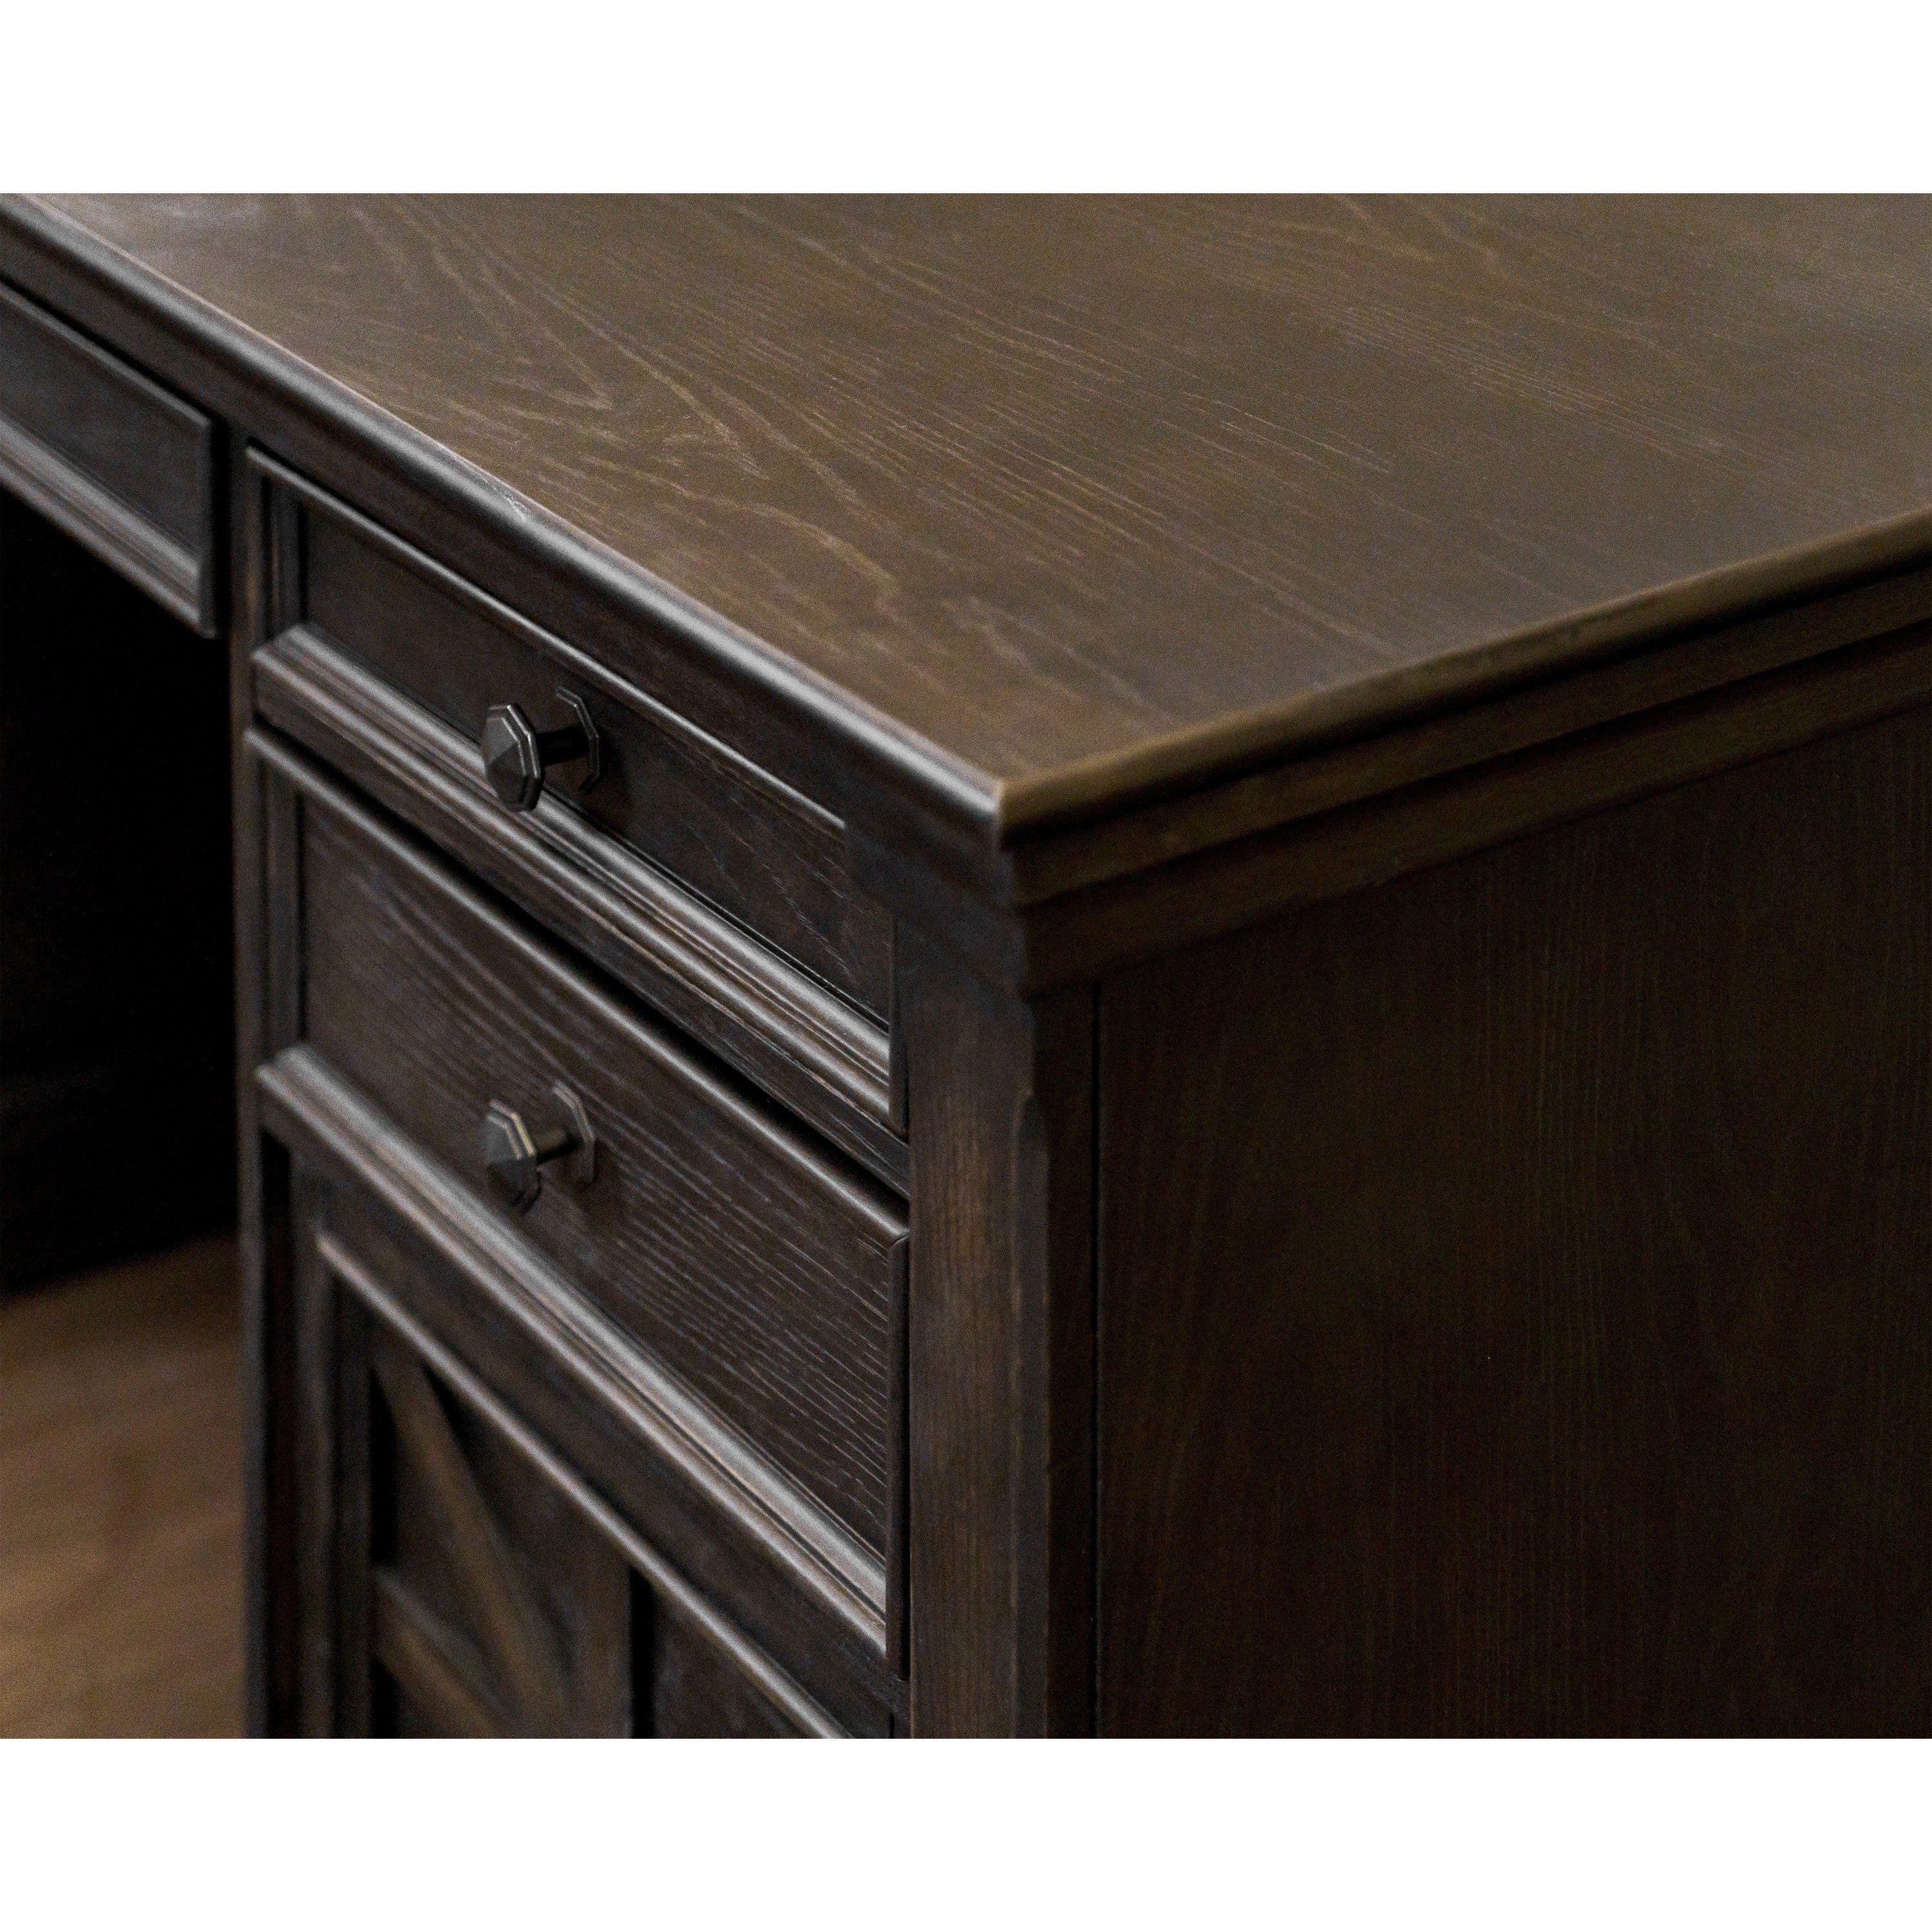 martin-kingston-office-desking-unit-66-x-2230-7-x-utility-file-drawers-material-wood-finish-dark-chocolate-rub-through_mrtimkn689 - 5